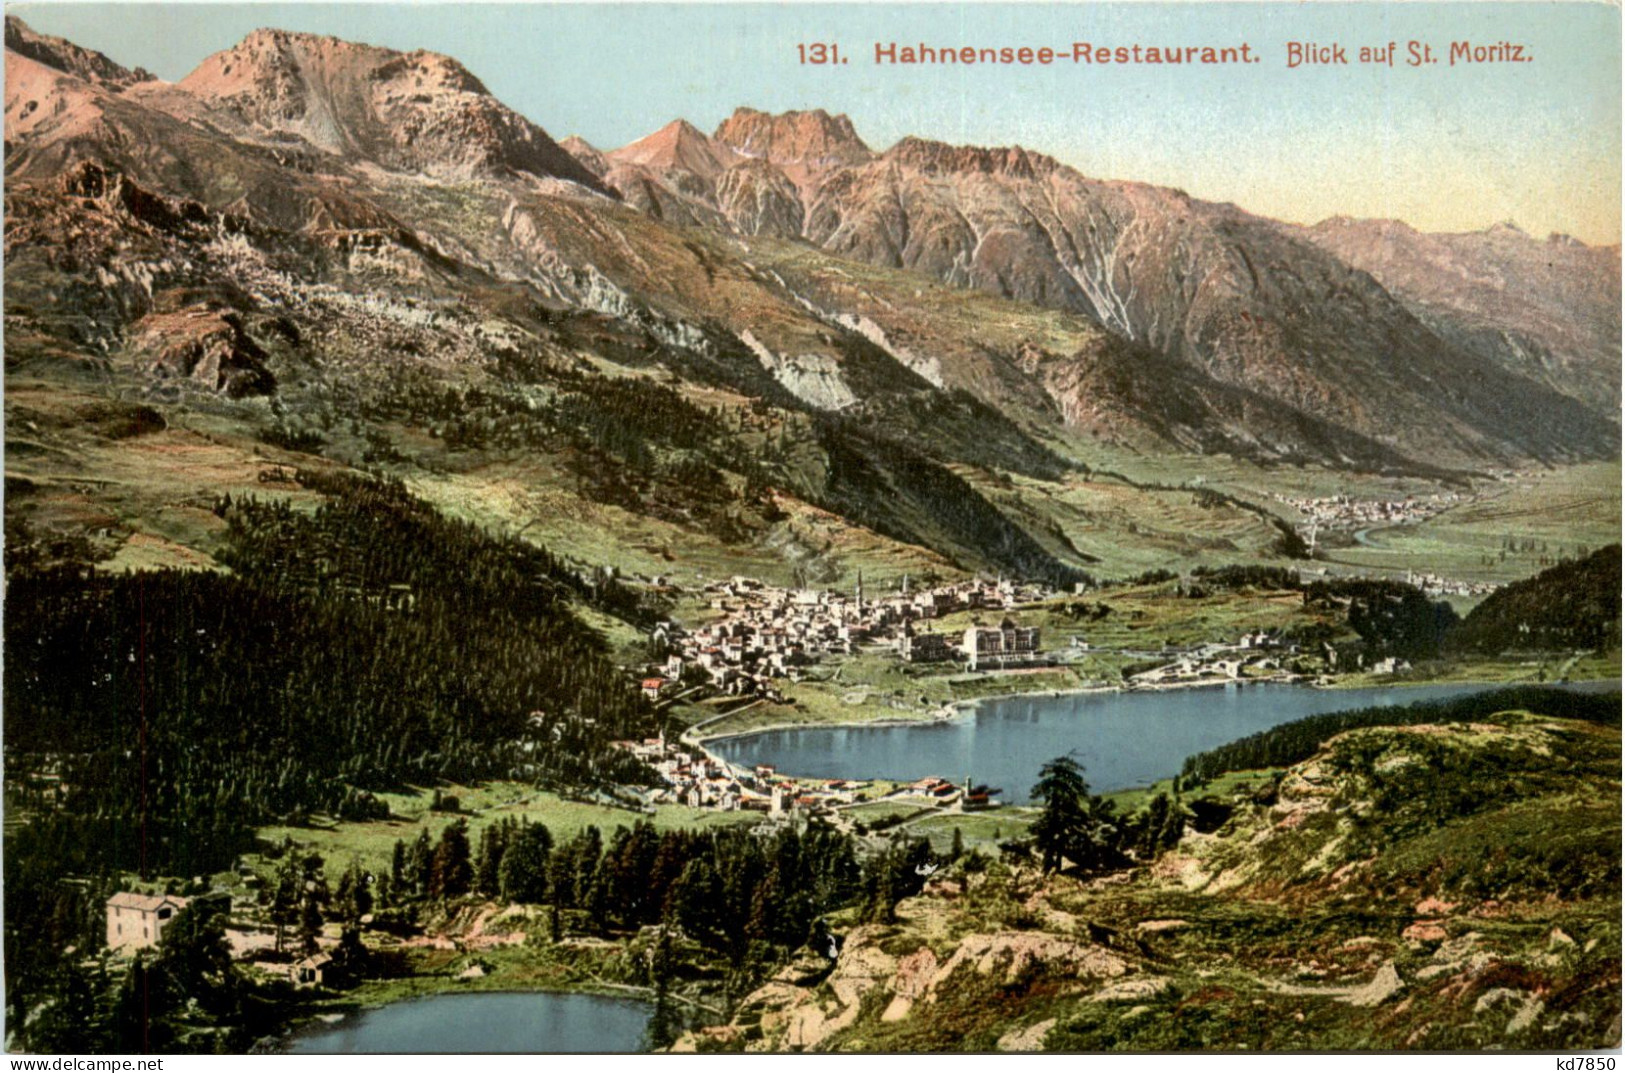 St. Moritz - Hahnensee Restaurant - St. Moritz